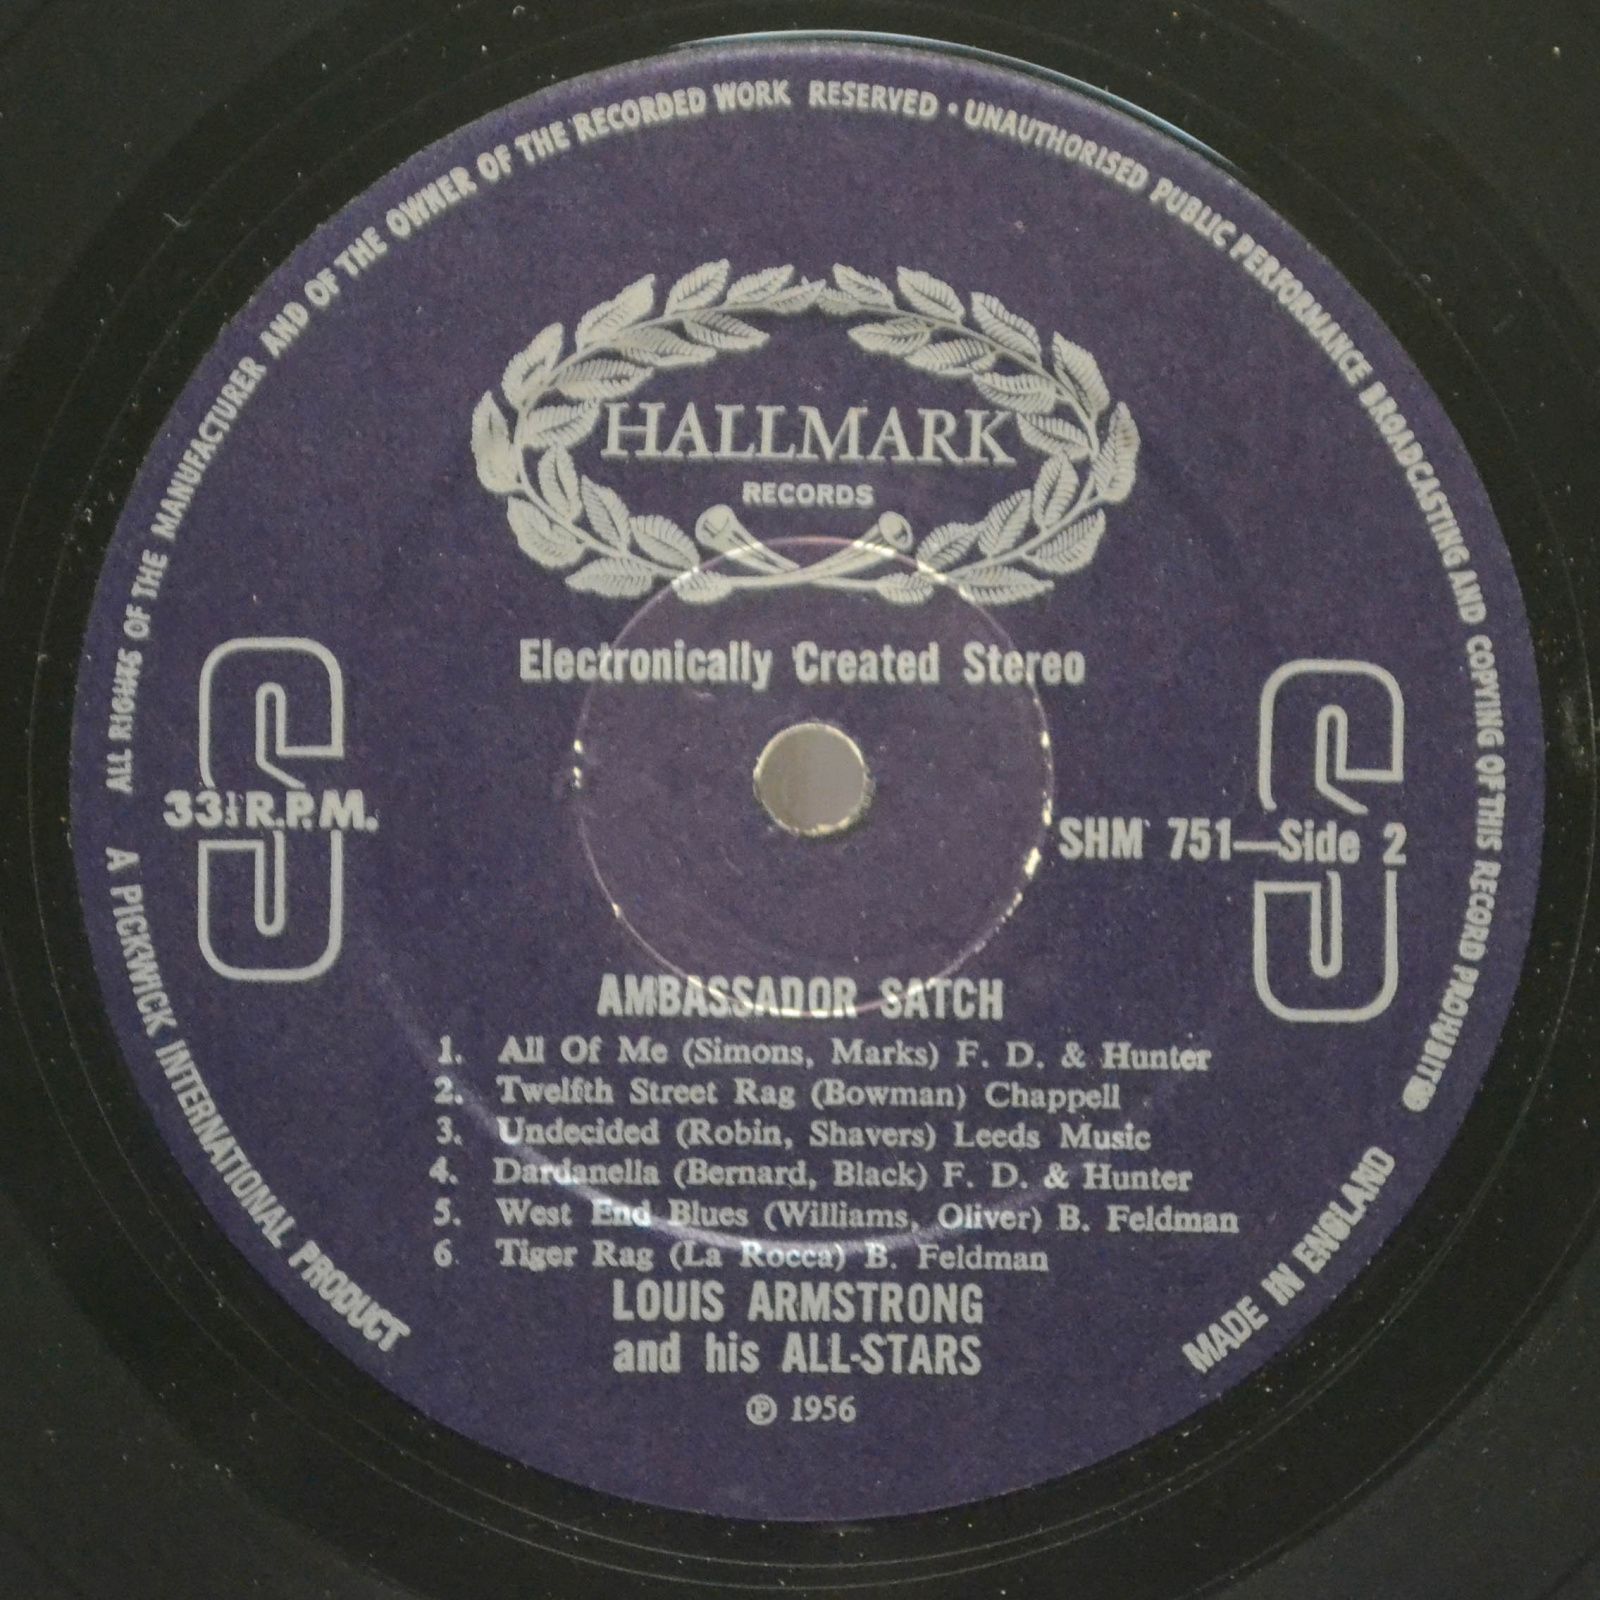 Louis Armstrong & His All-Stars — Ambassador Satch (UK), 1971